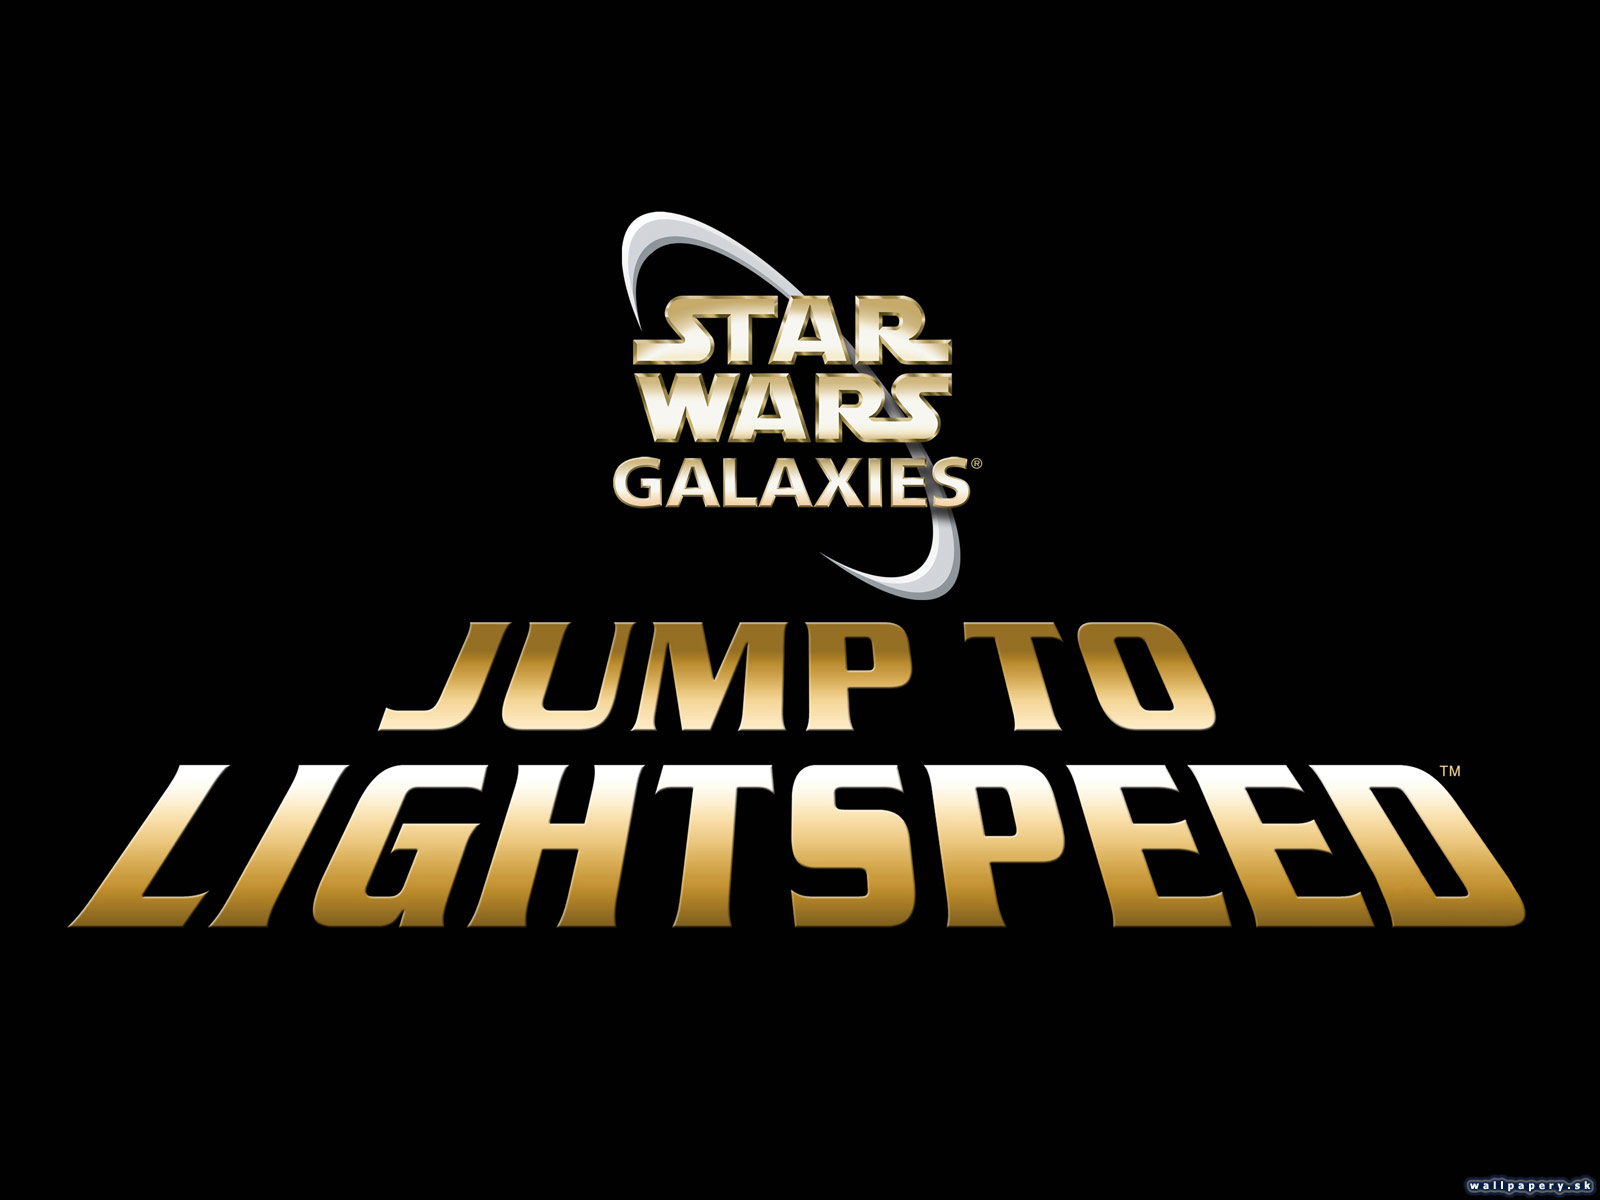 Star Wars Galaxies: Jump to Lightspeed - wallpaper 6